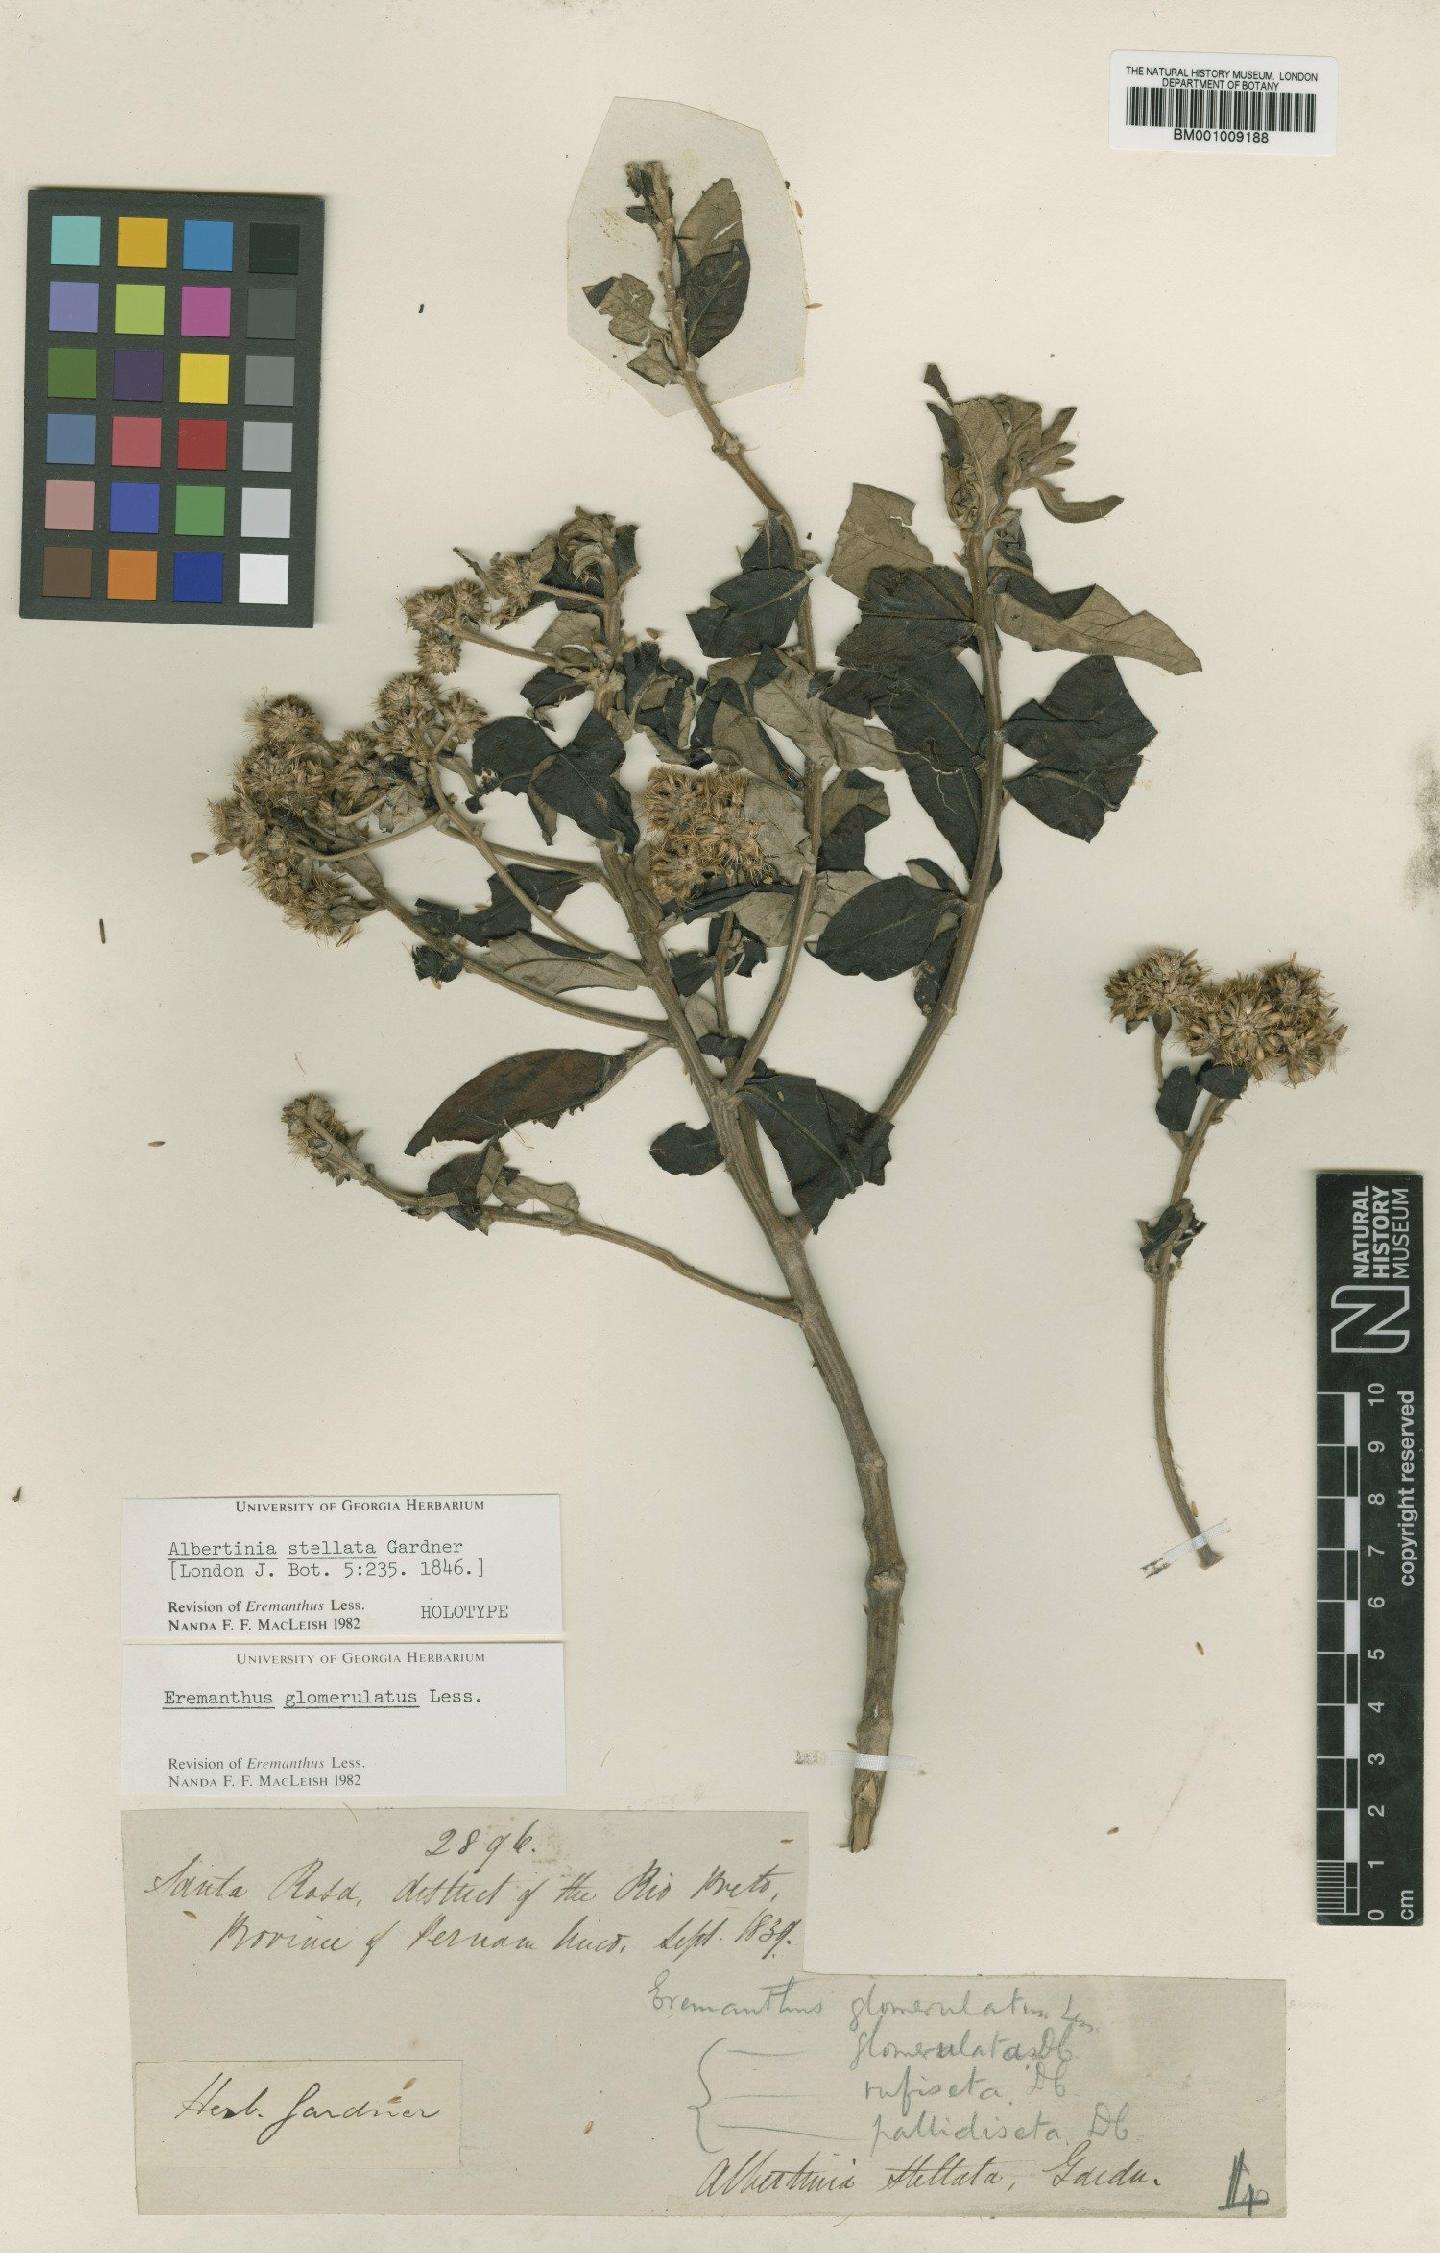 To NHMUK collection (Eremanthus glomerulatus Less.; Holotype; NHMUK:ecatalogue:557184)